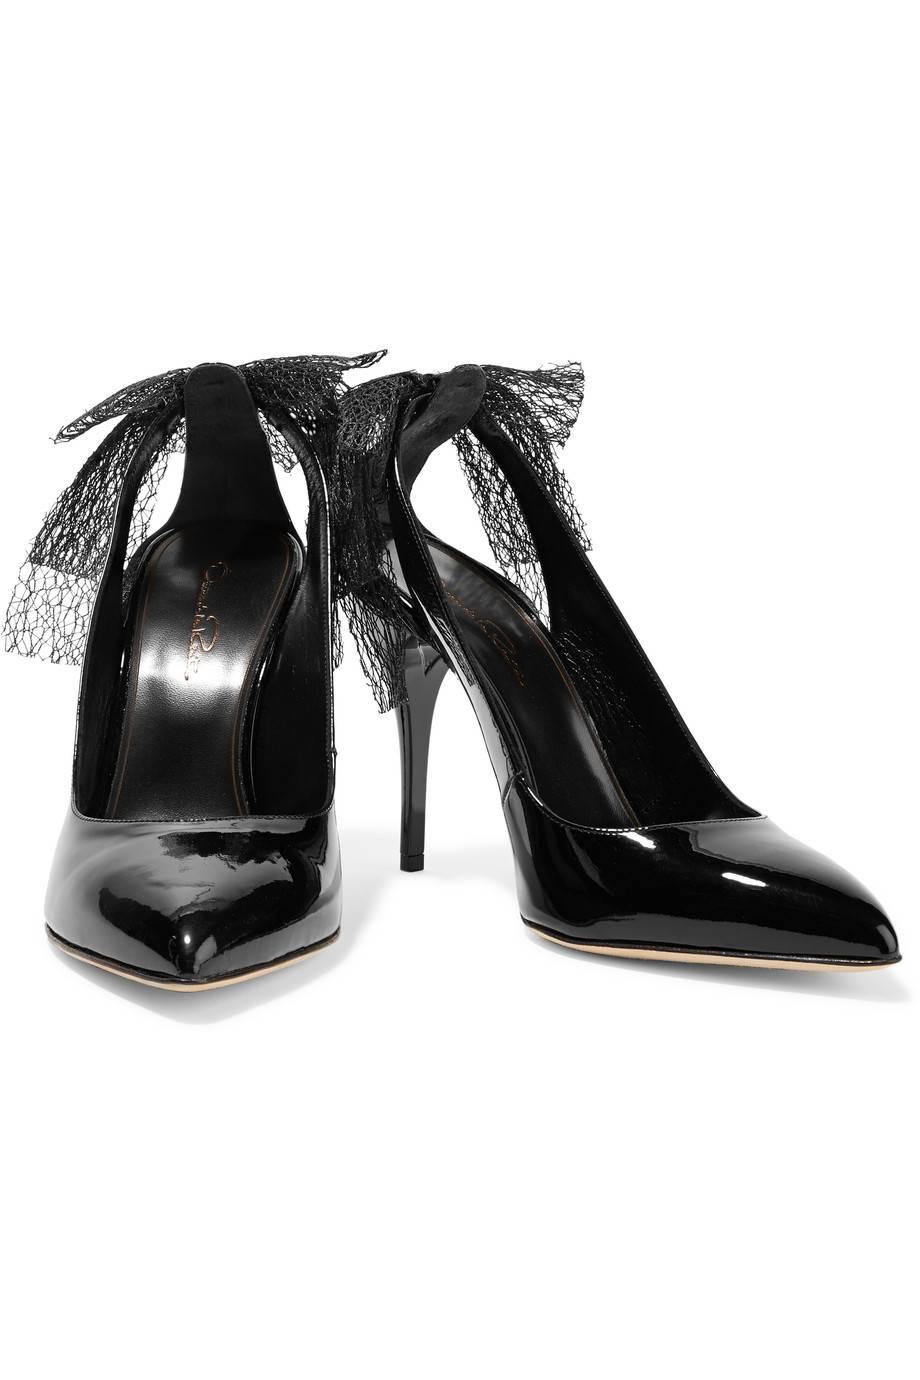 Women's Oscar de la Renta NEW & SOLD OUT Black Patent Leather Heels Pumps in Box